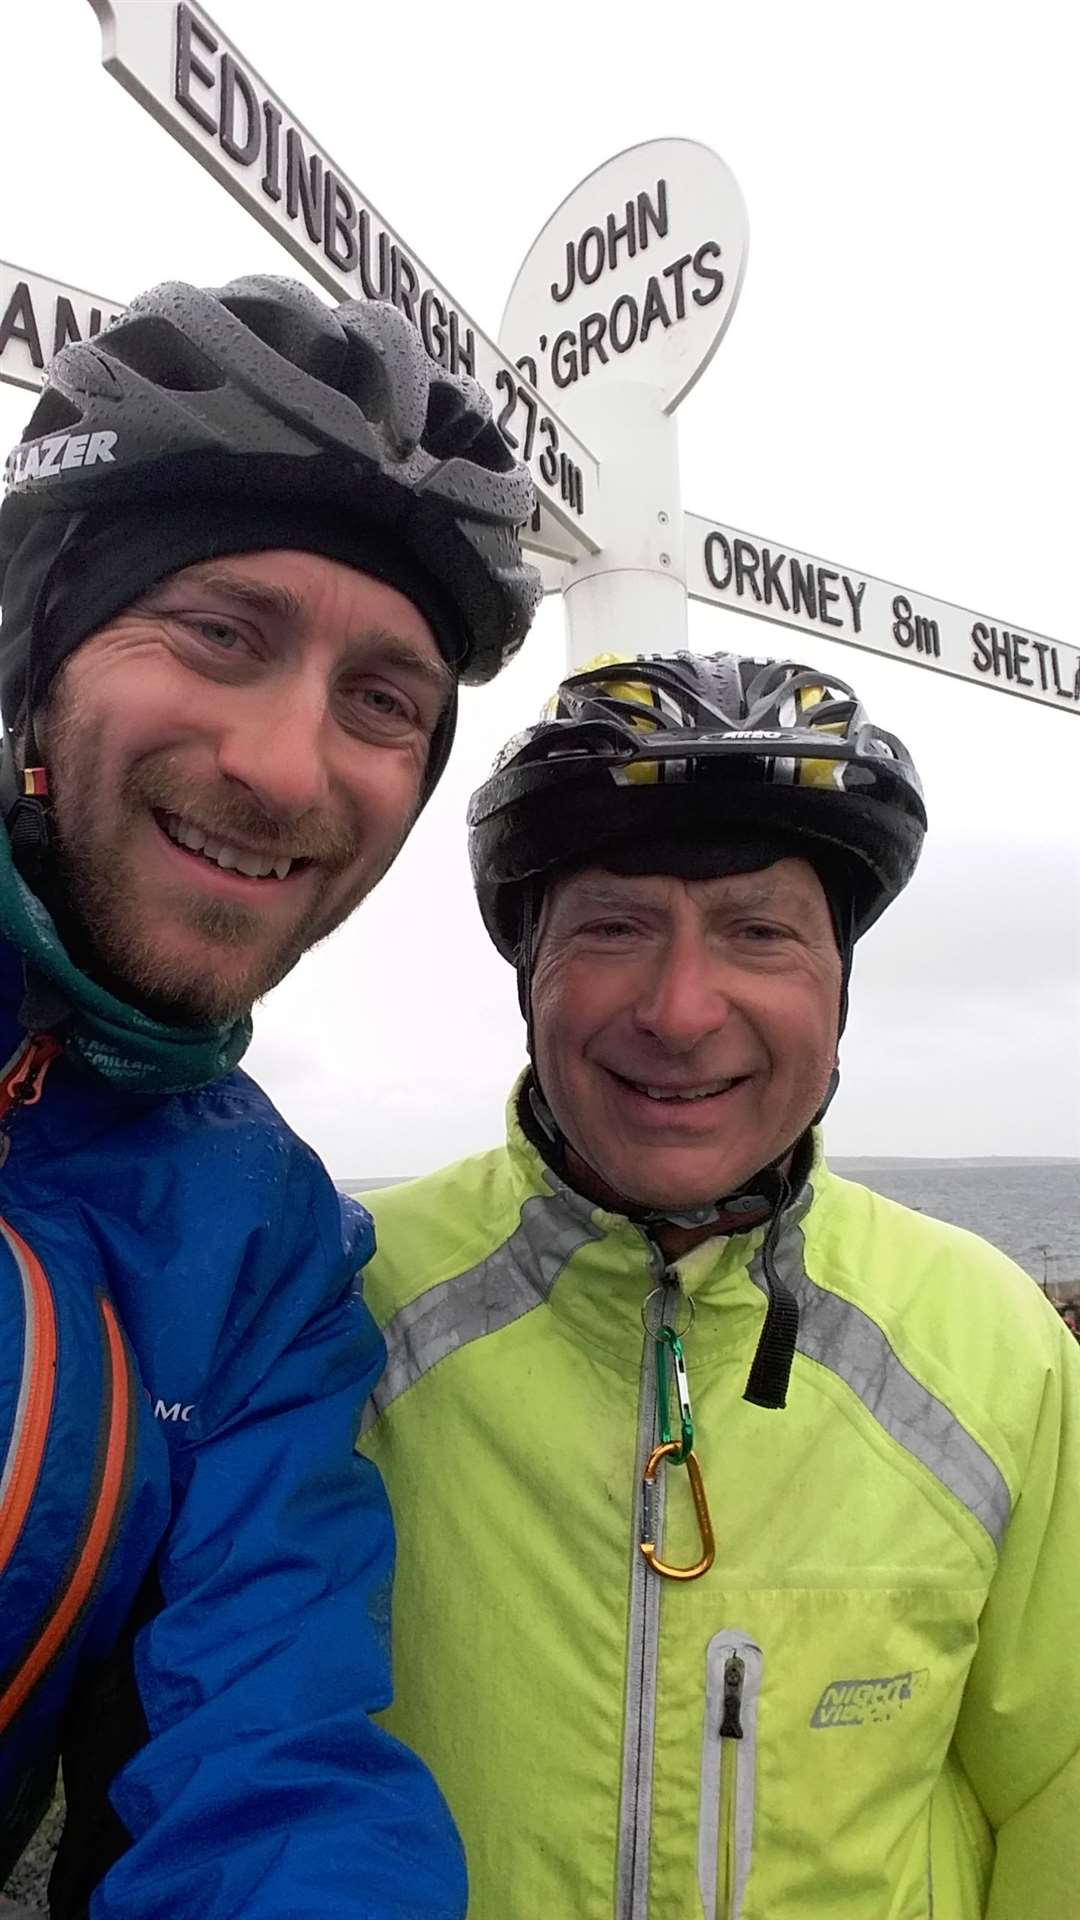 End of the road: John and his dad at the milepost at John O'Groats.